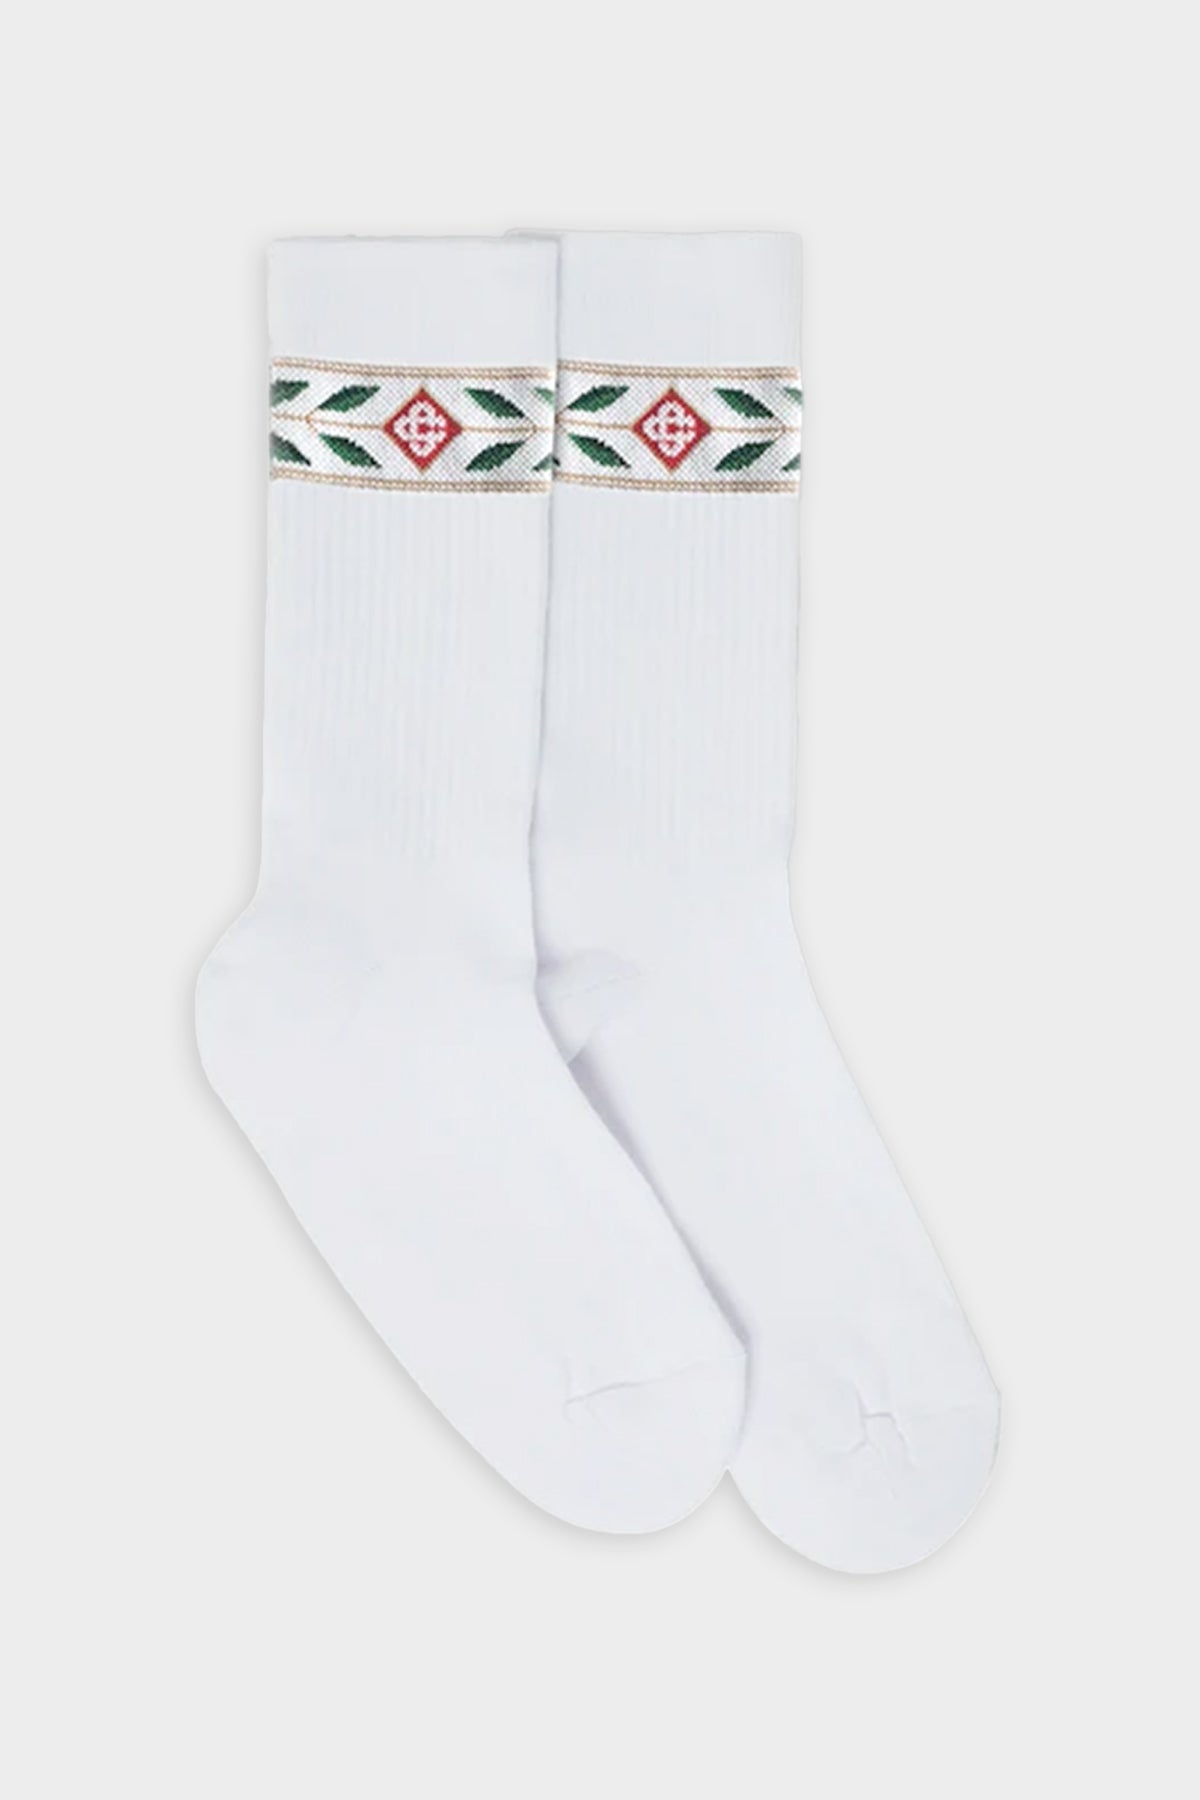 Laurel Sport Socks in White - shop-olivia.com